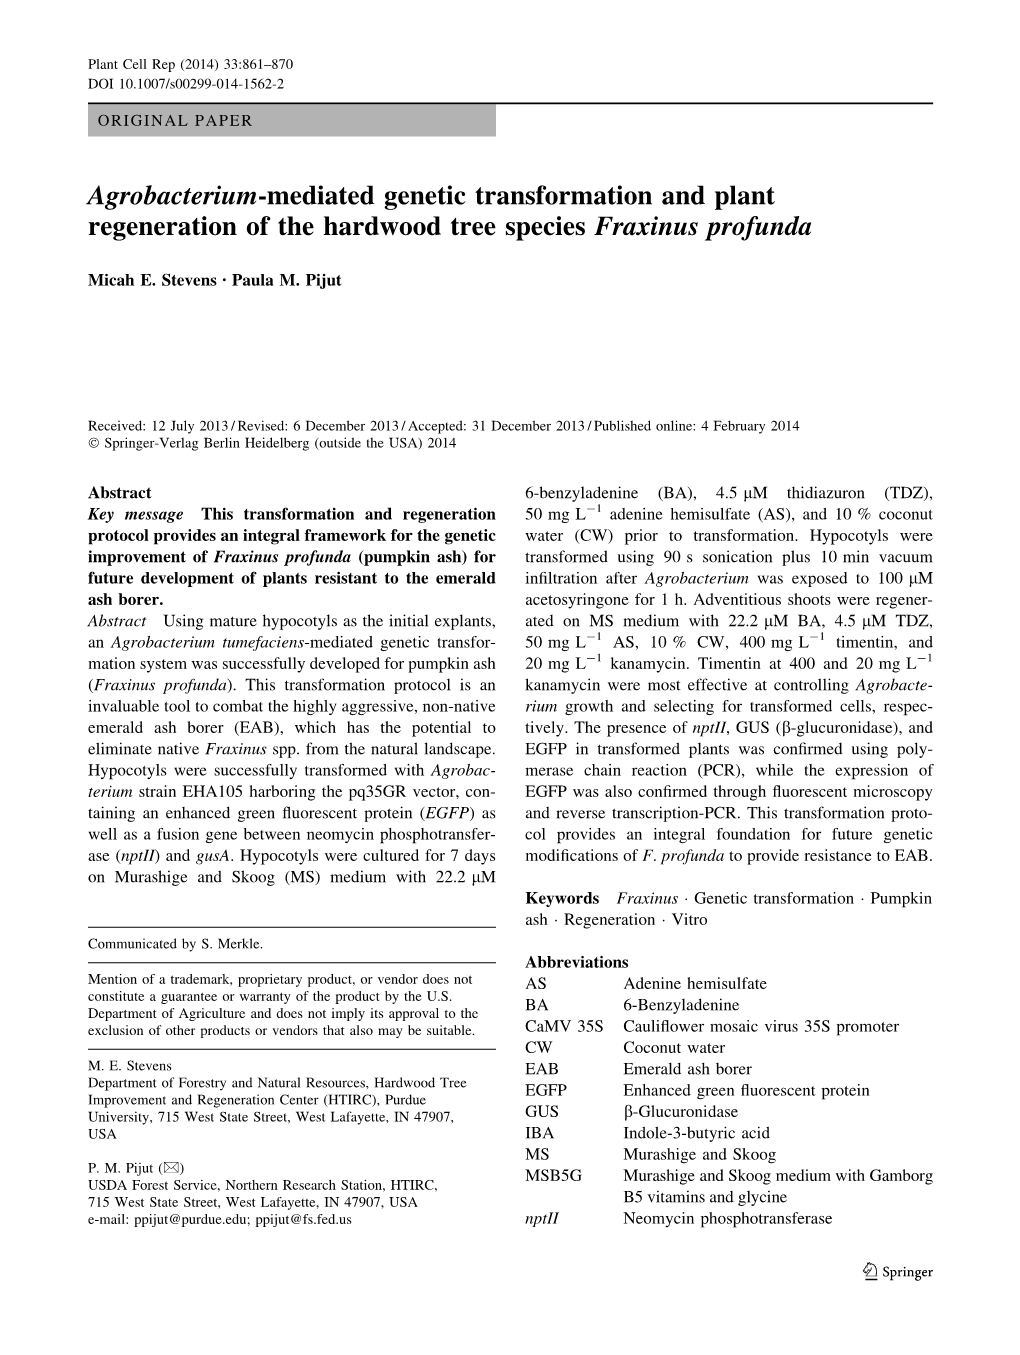 Agrobacterium-Mediated Genetic Transformation and Plant Regeneration of the Hardwood Tree Species Fraxinus Profunda